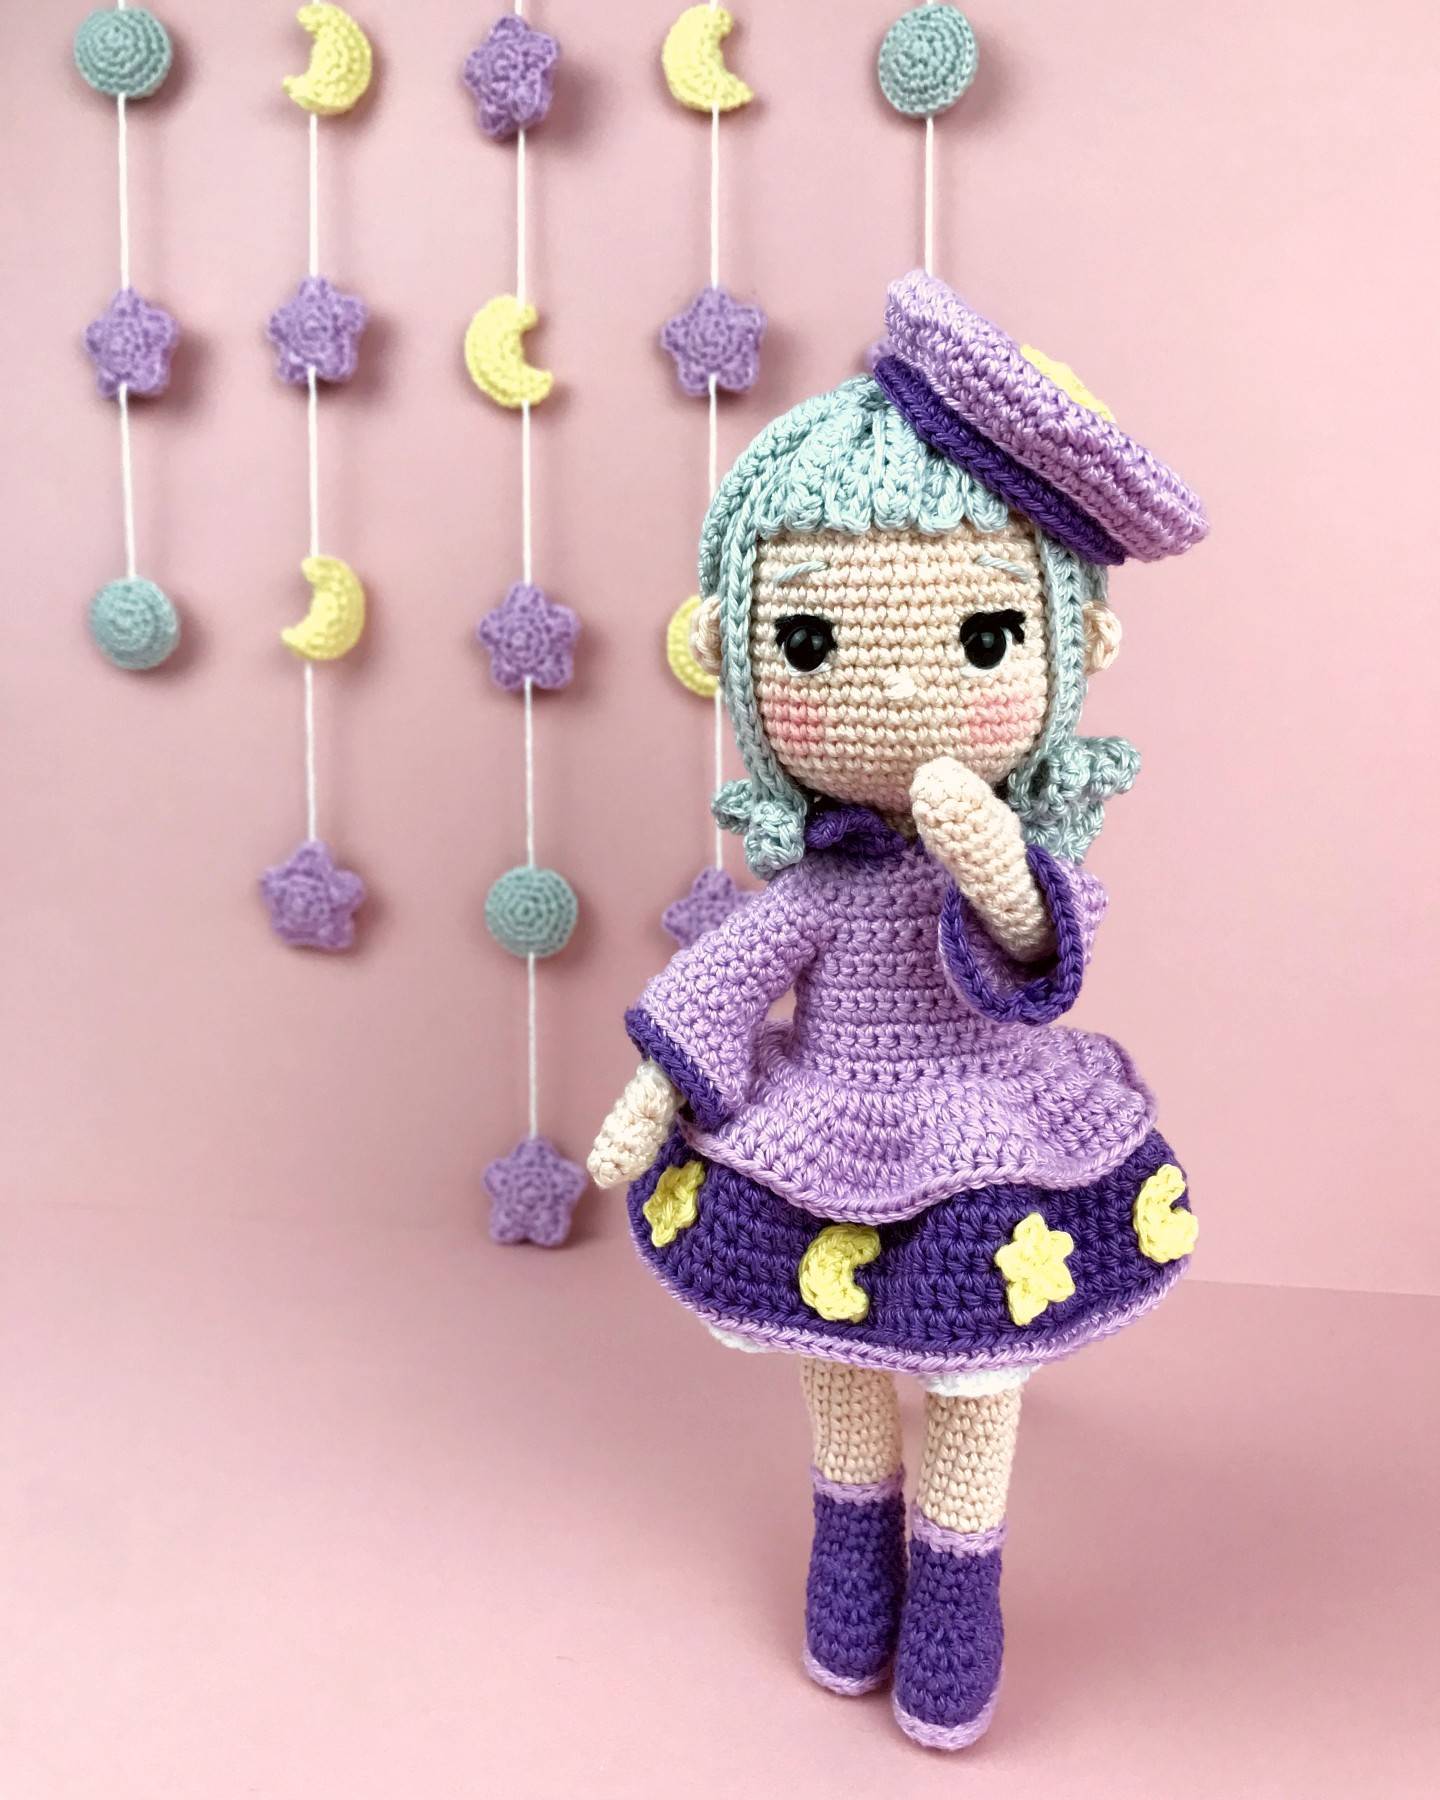 Starrya, girl from stars - Crochet Amigurumi pattern - My Rainbow Crochet